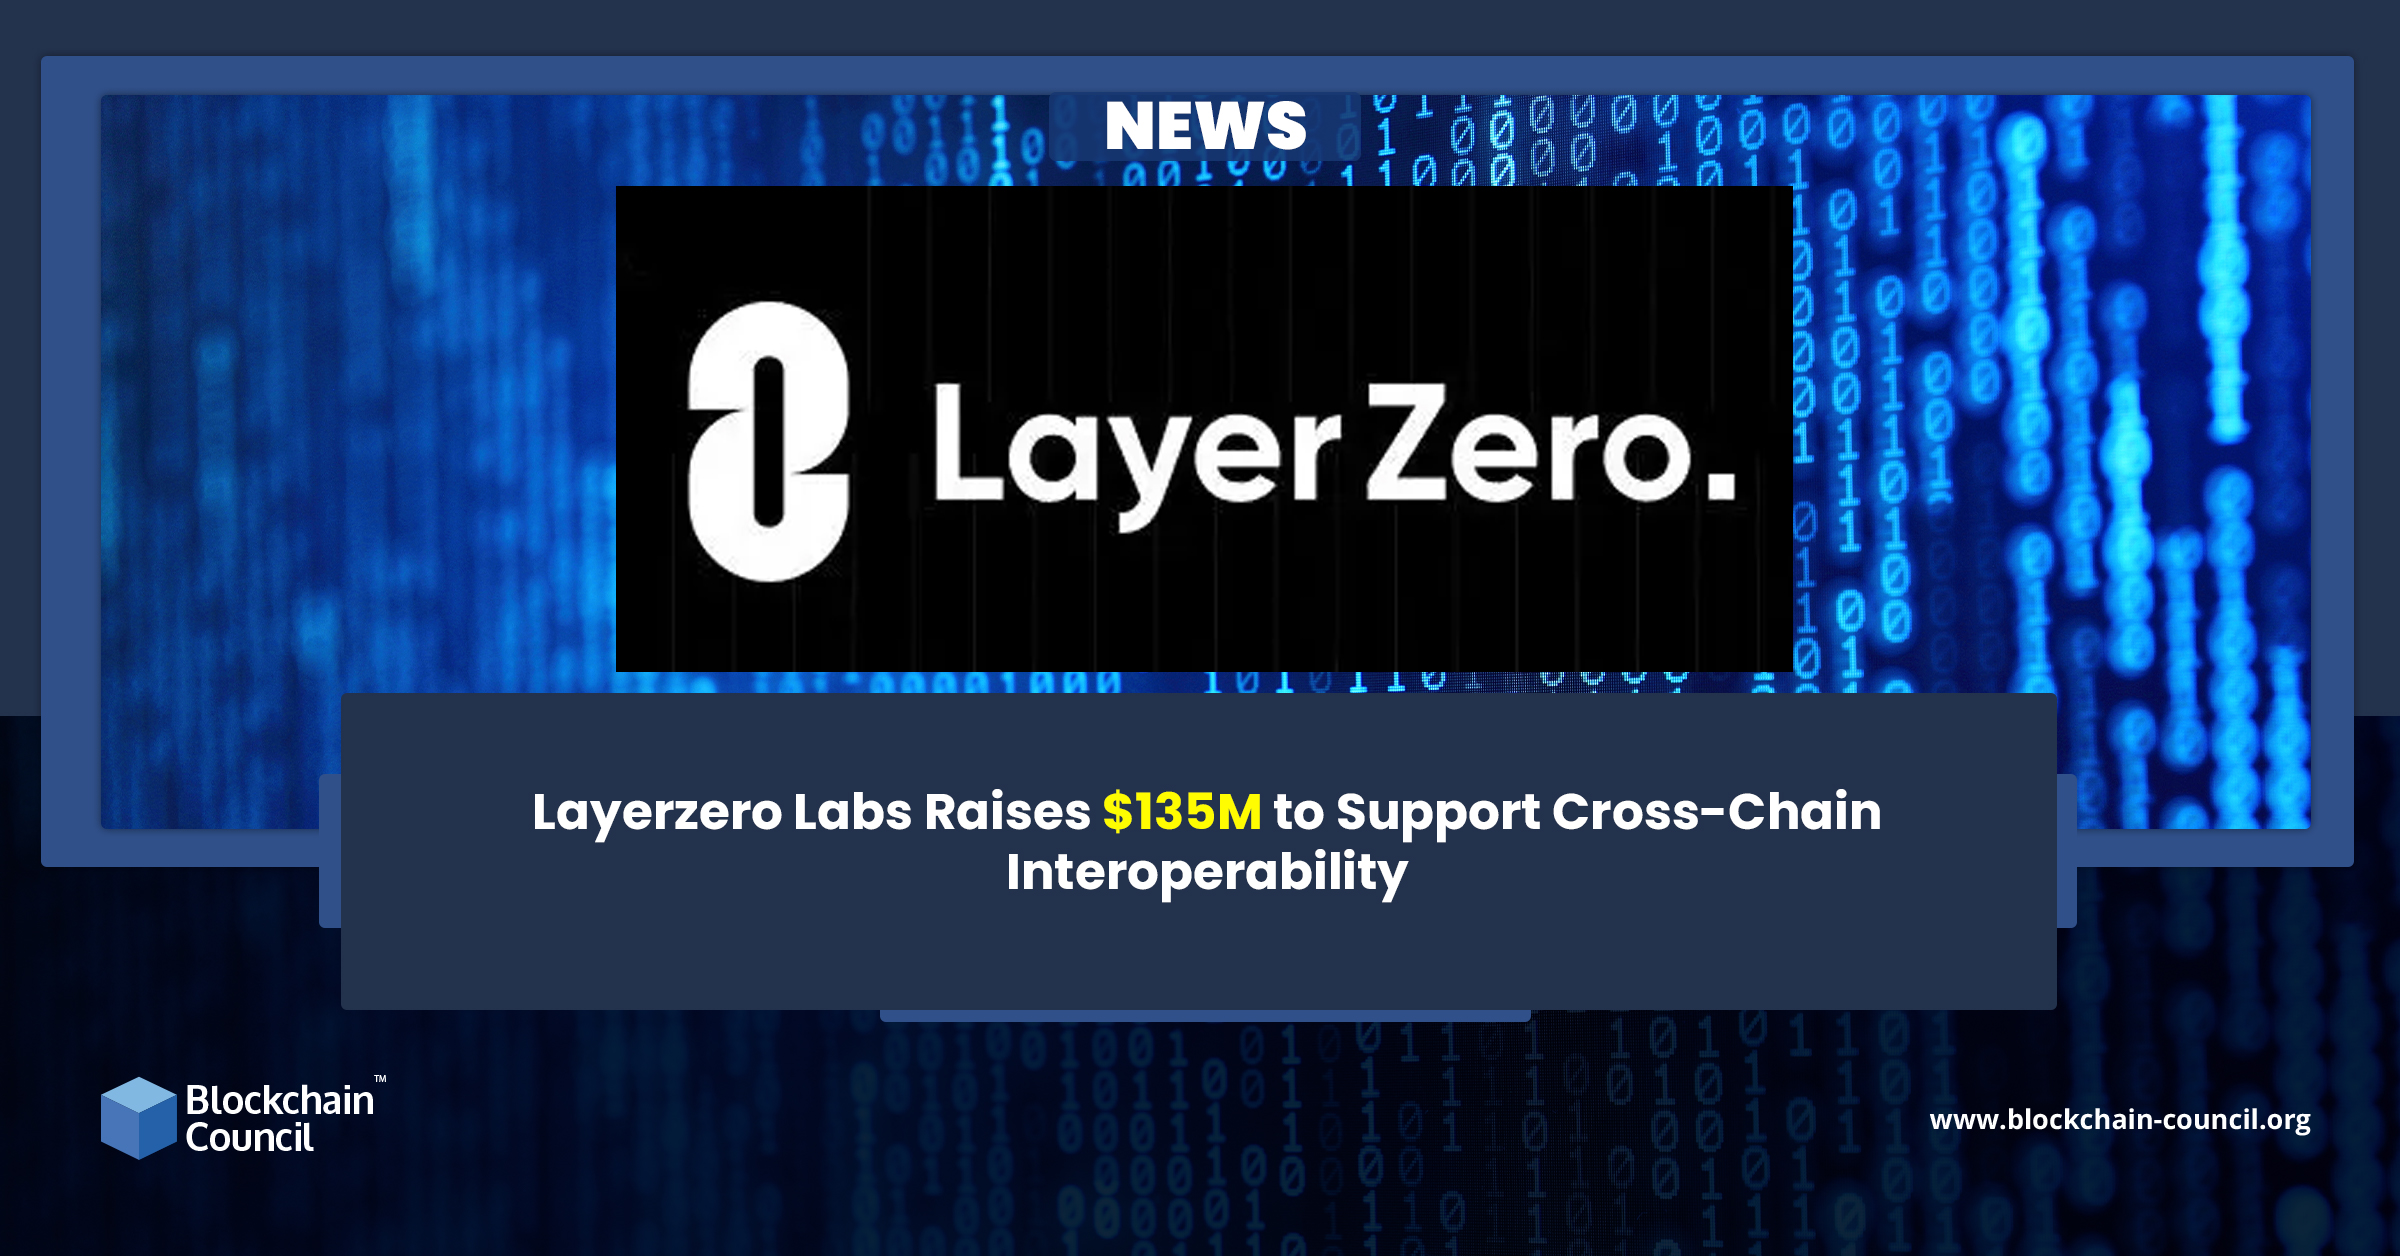 Layerzero Labs Raises $135M to Support Cross-Chain Interoperability